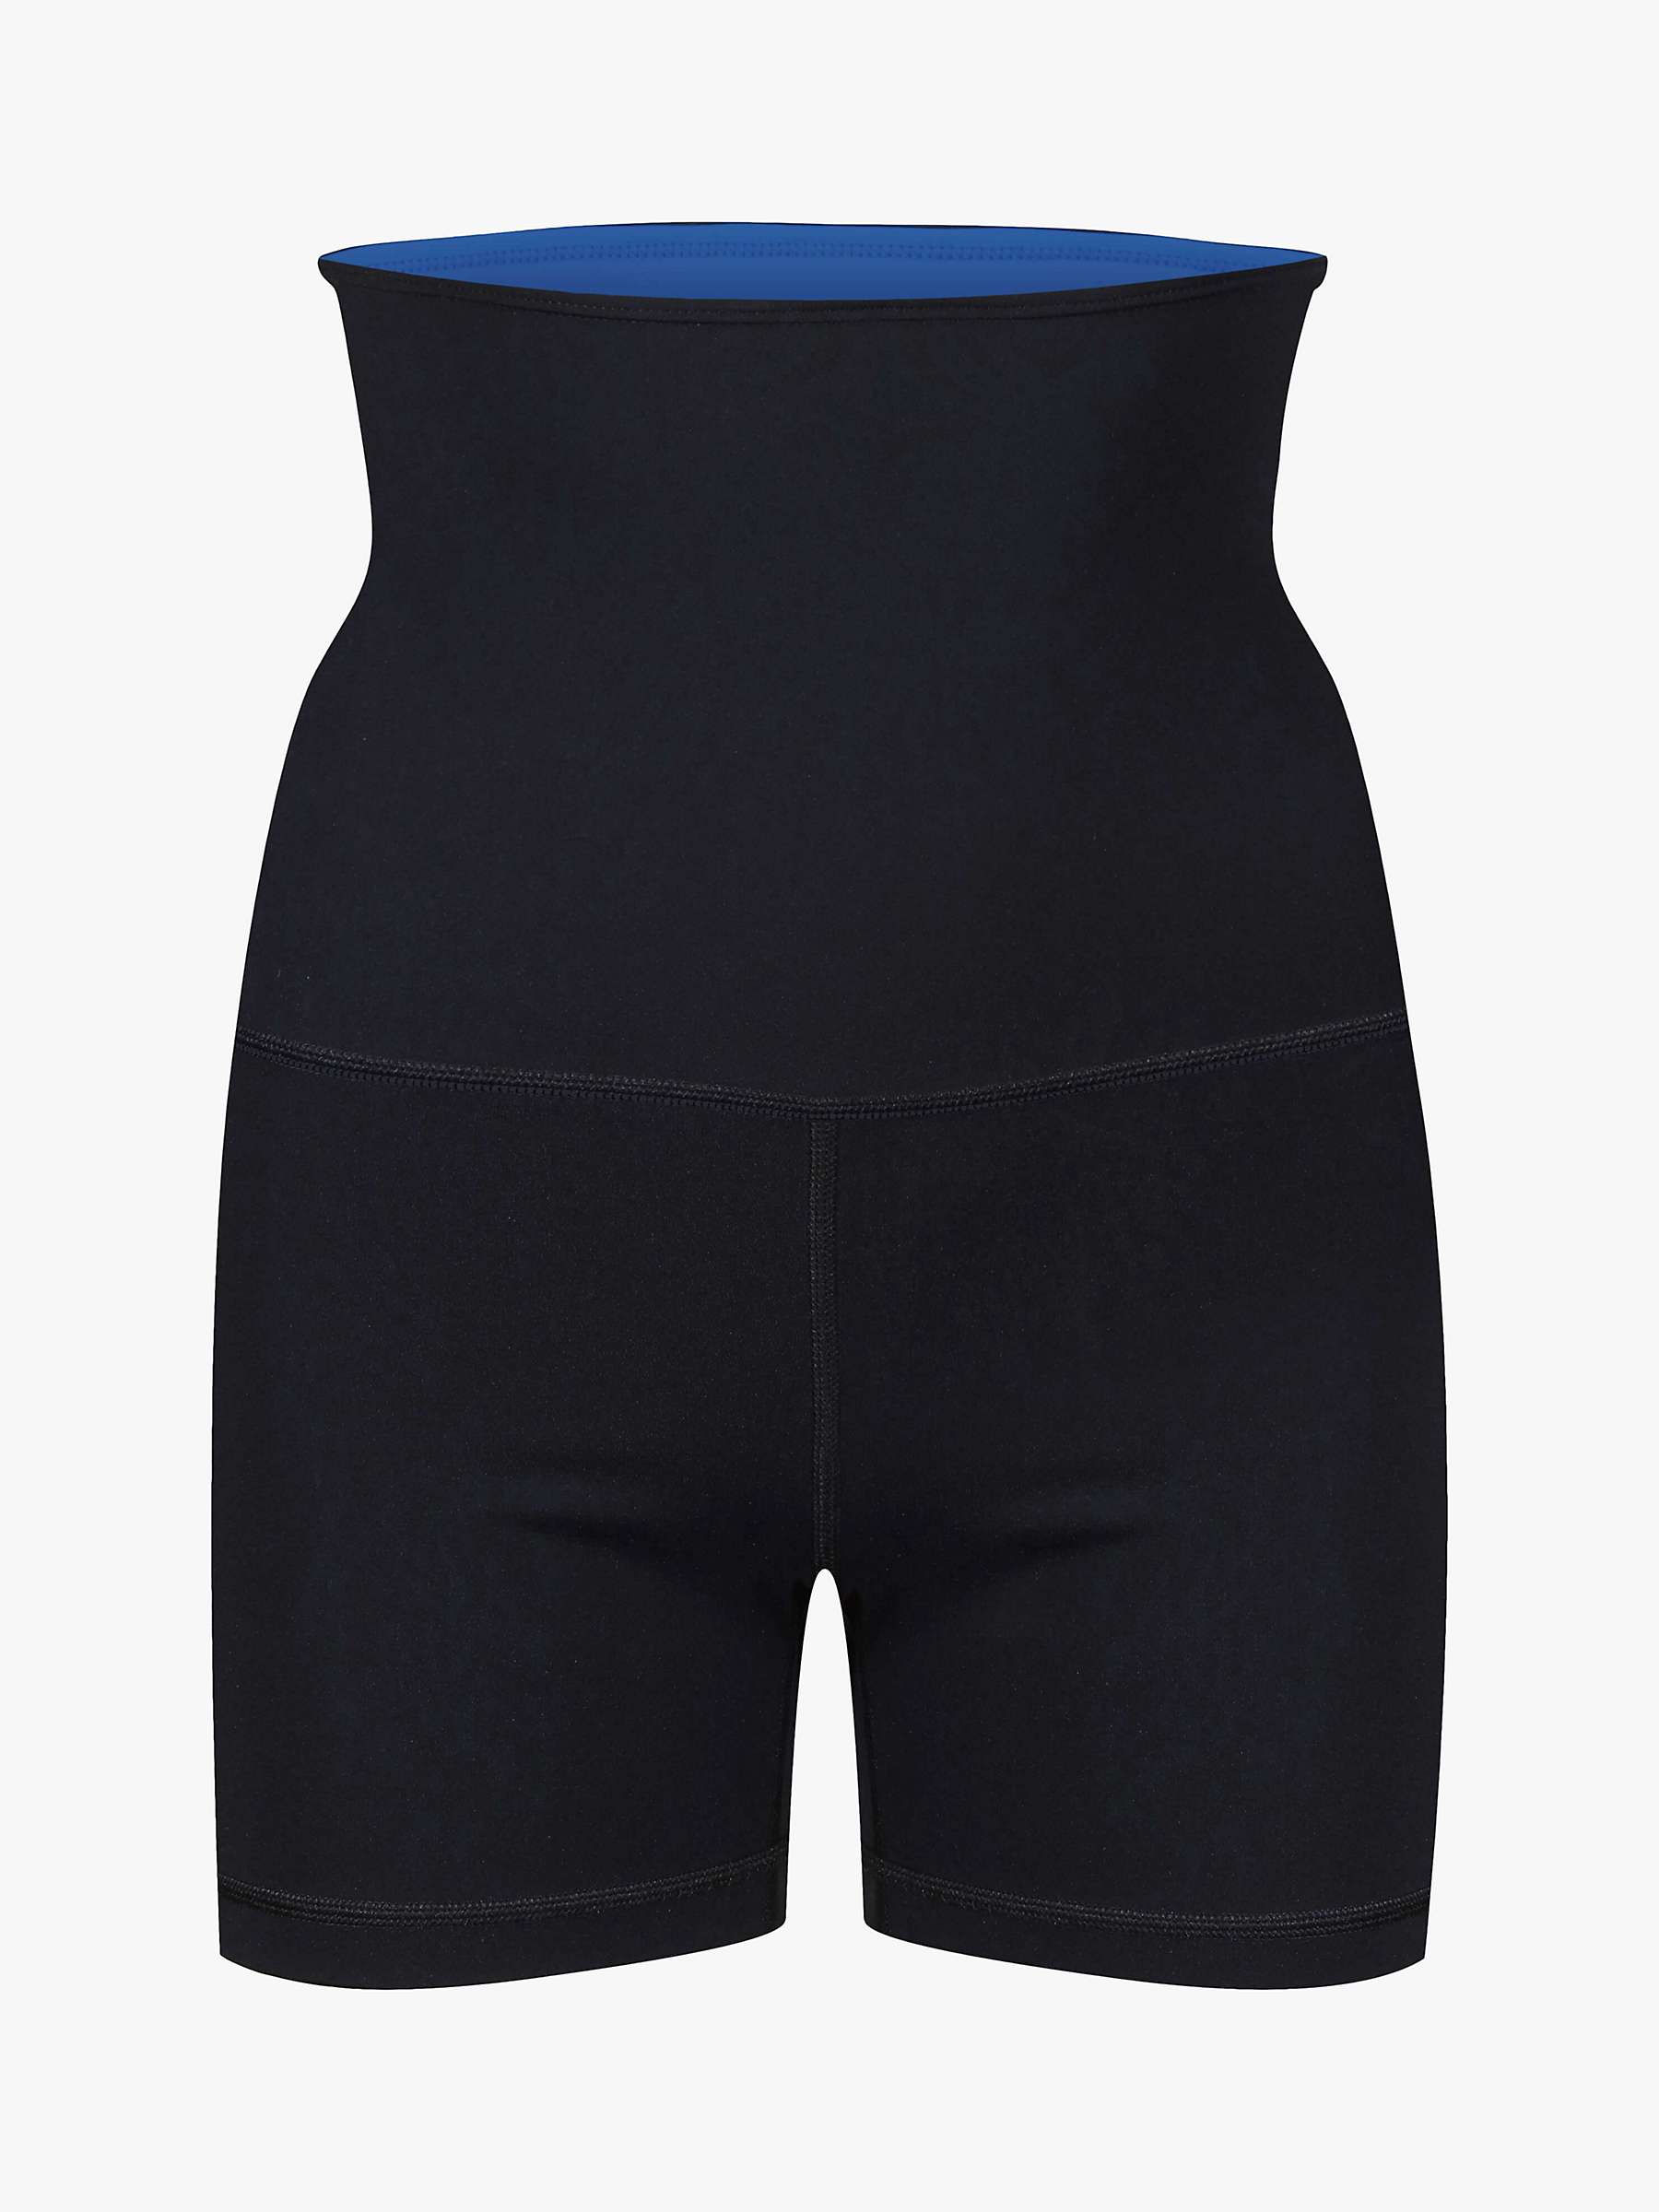 Buy Davy J Sculpt Swim Shorts, Black/Blue Online at johnlewis.com